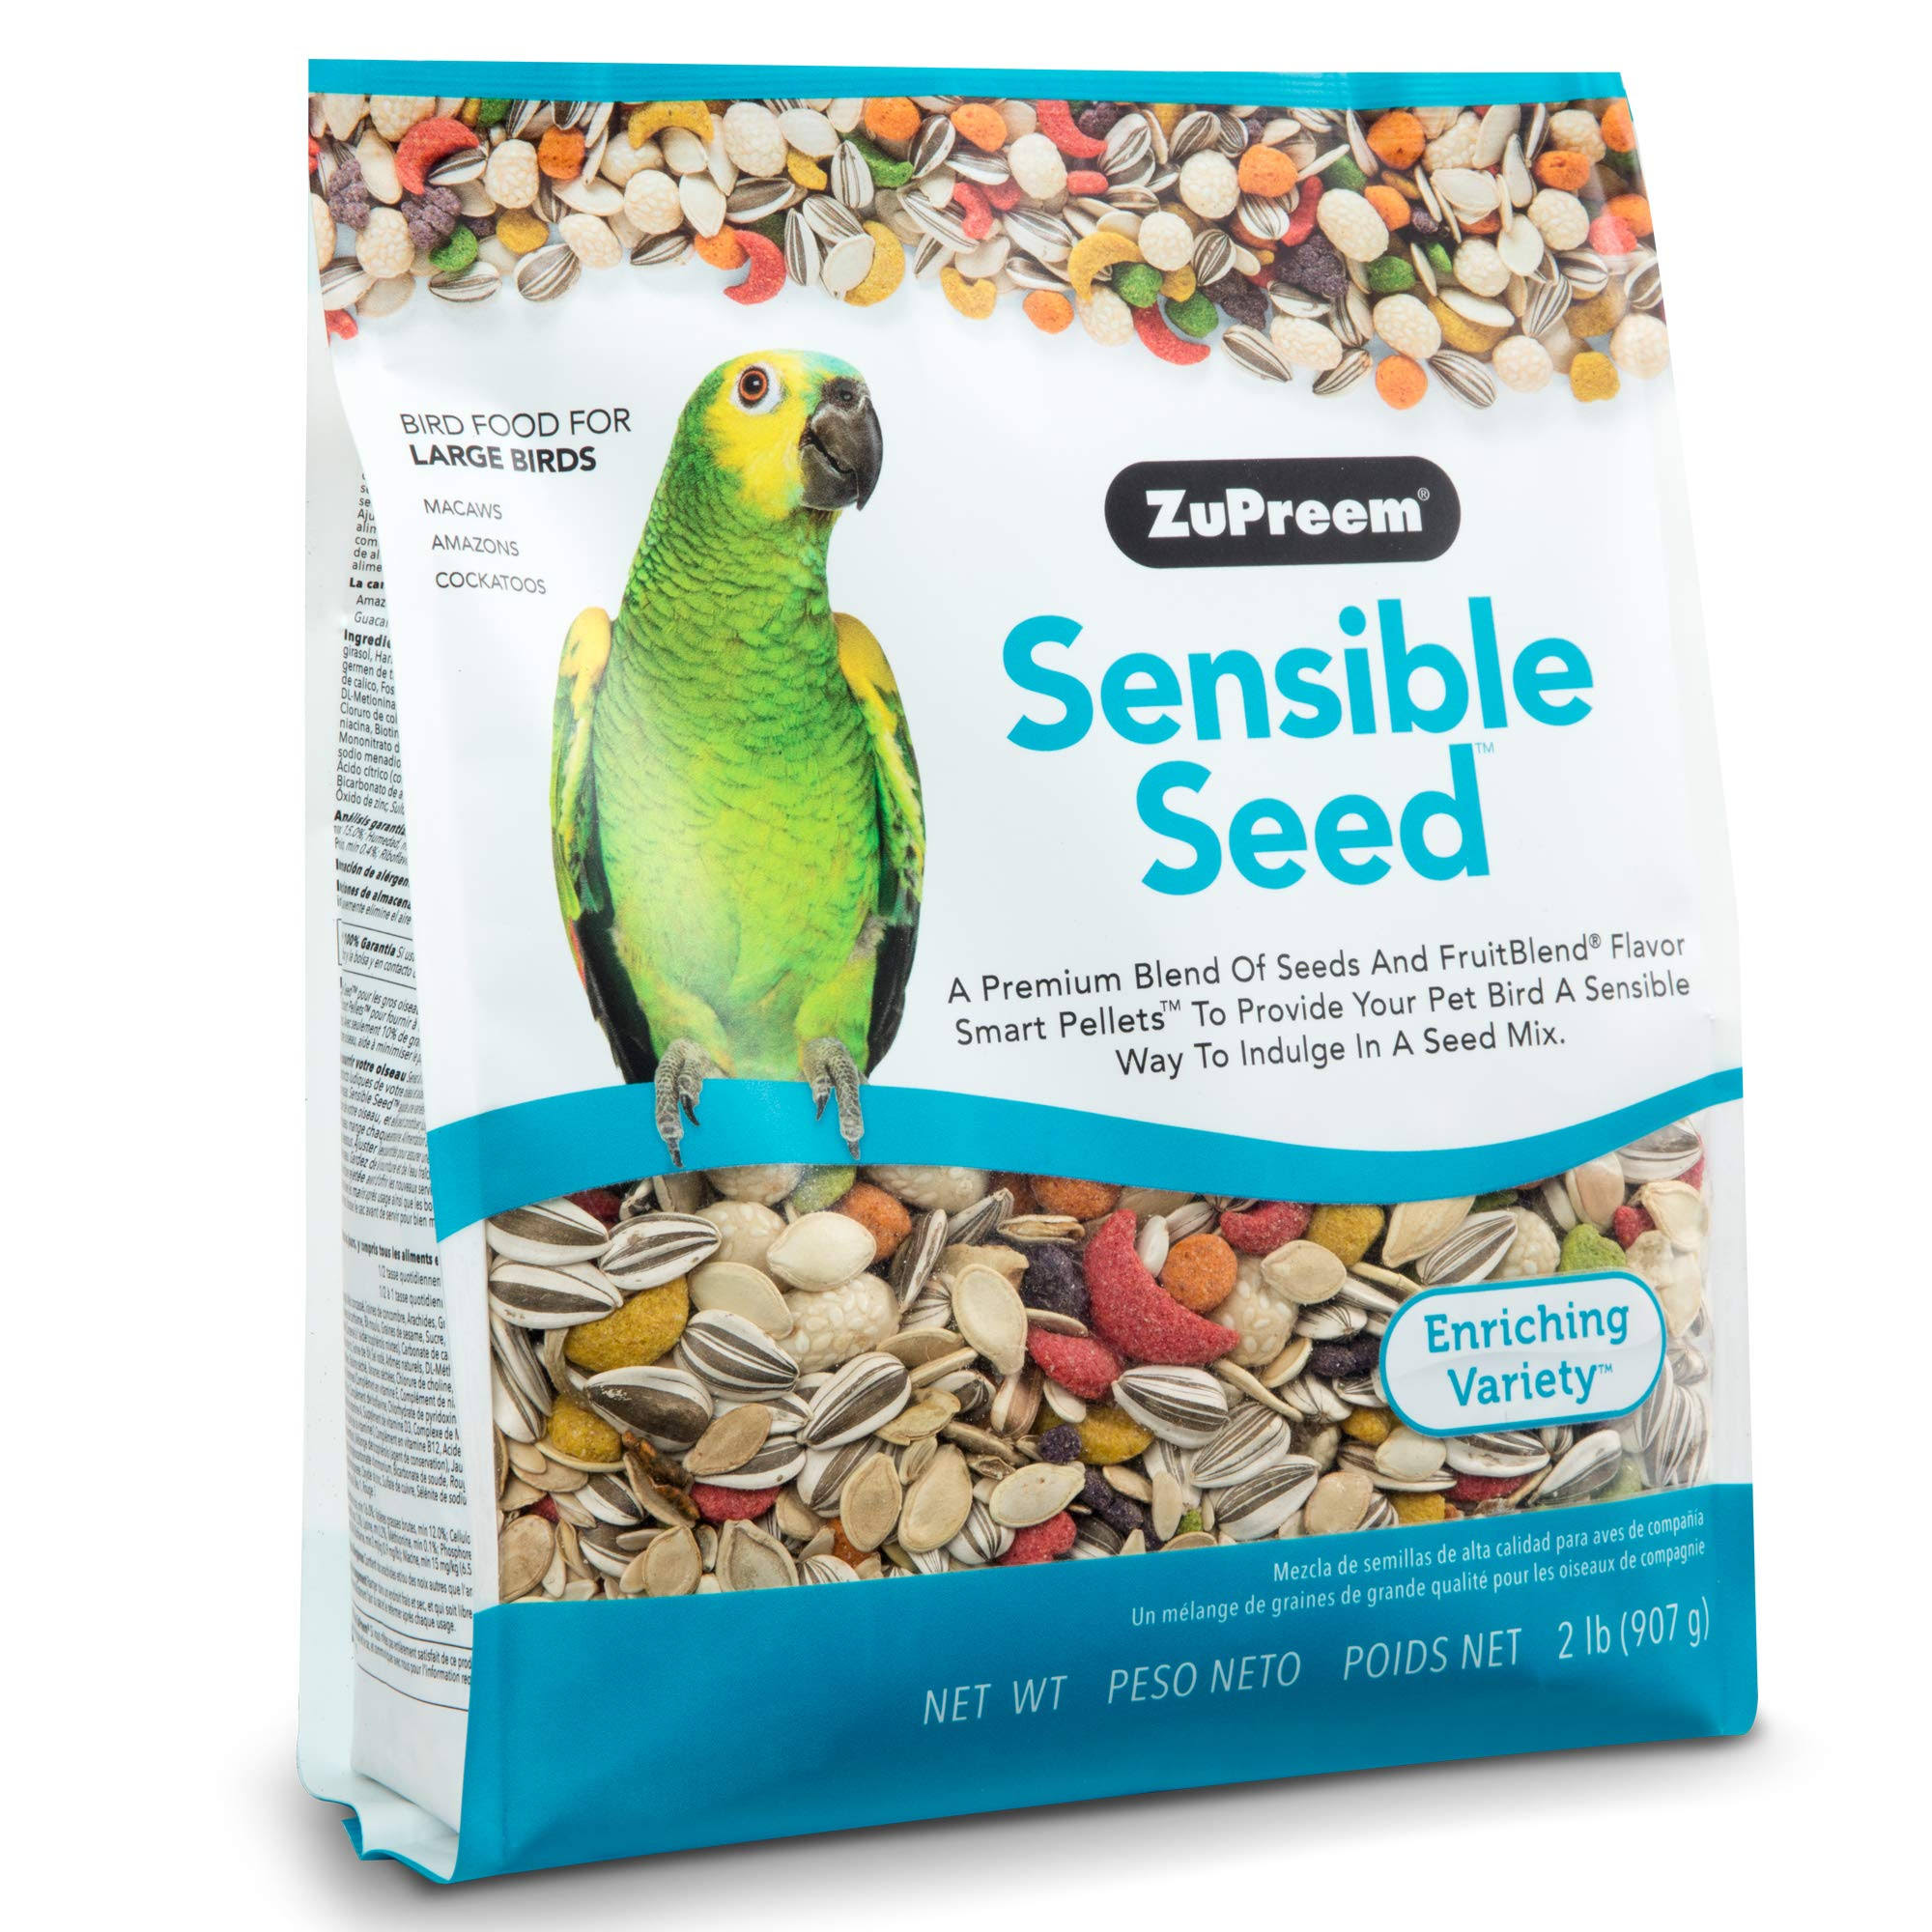 ZuPreem Sensible Seed Bird Food for Large Birds - 2lbs